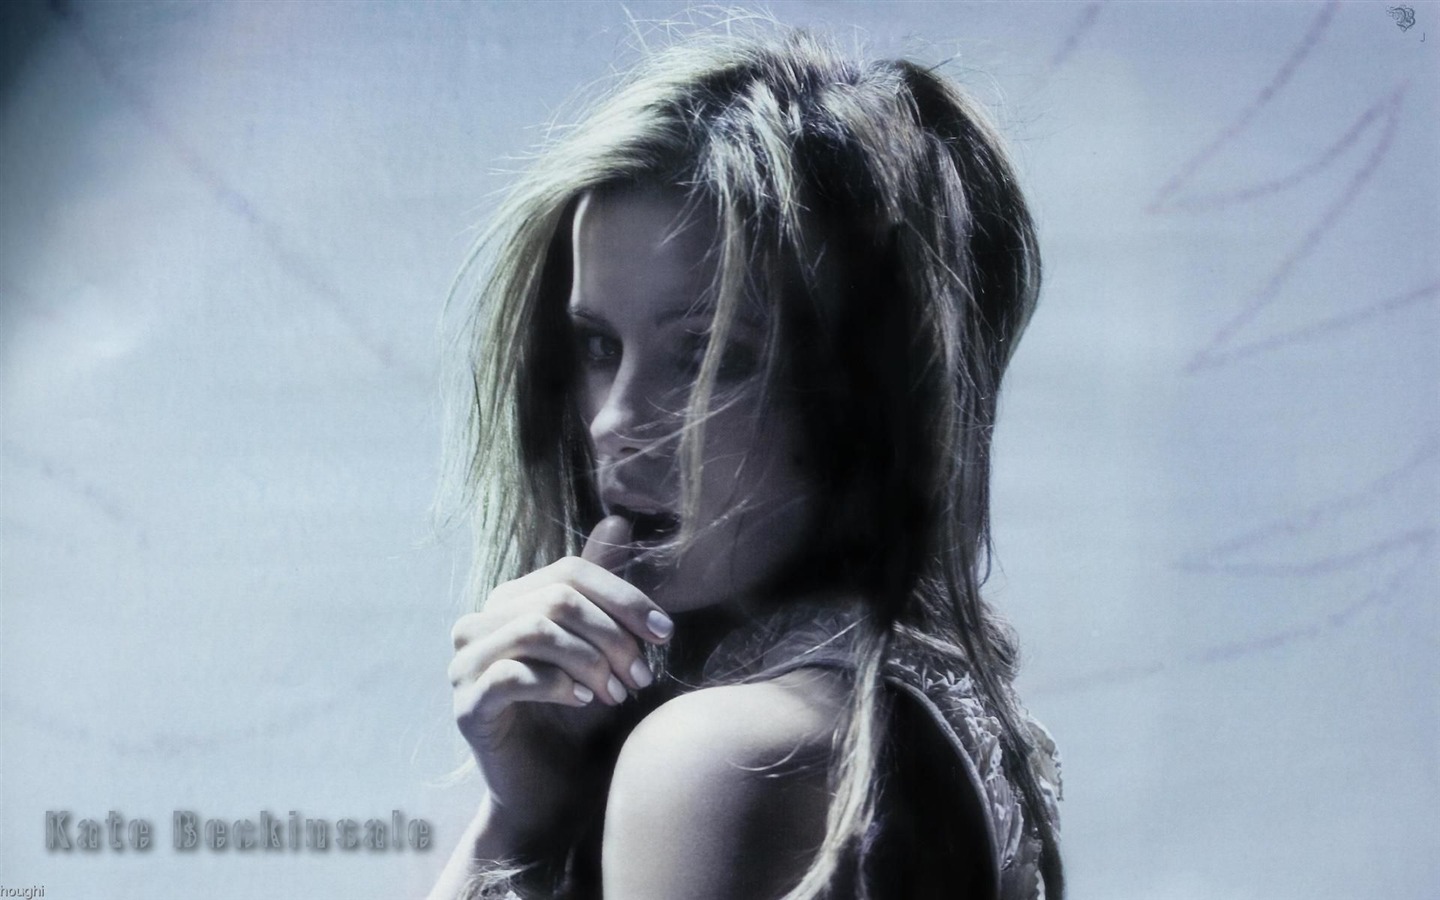 Kate Beckinsale 아름다운 벽지 #4 - 1440x900